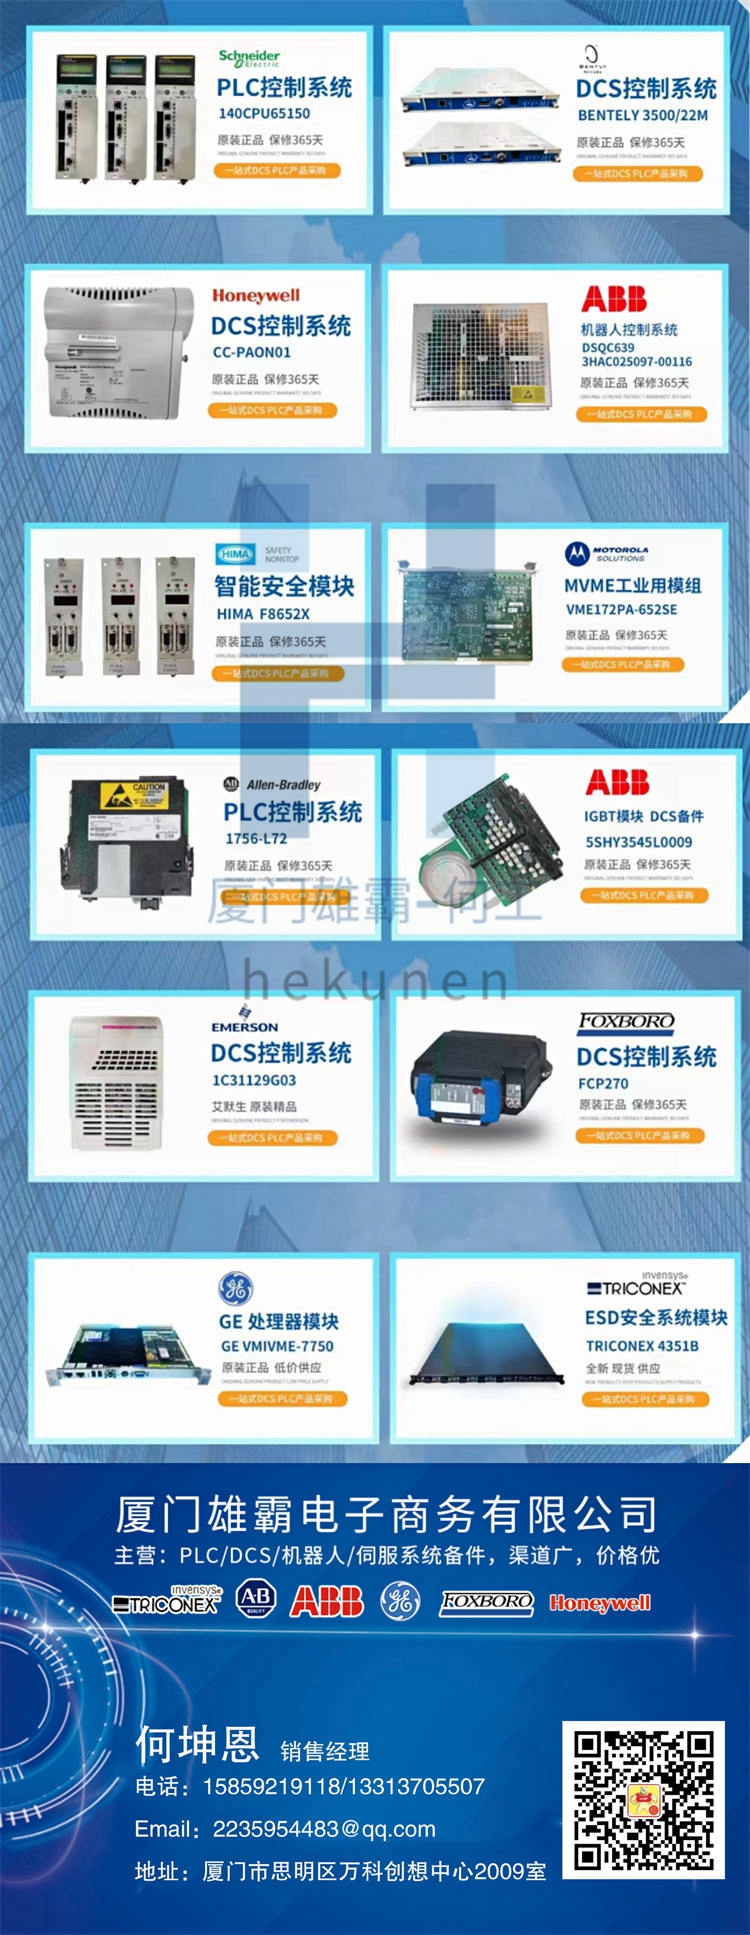 CI856K01 PLC控制器ABB 输入输出模块-备件销售 